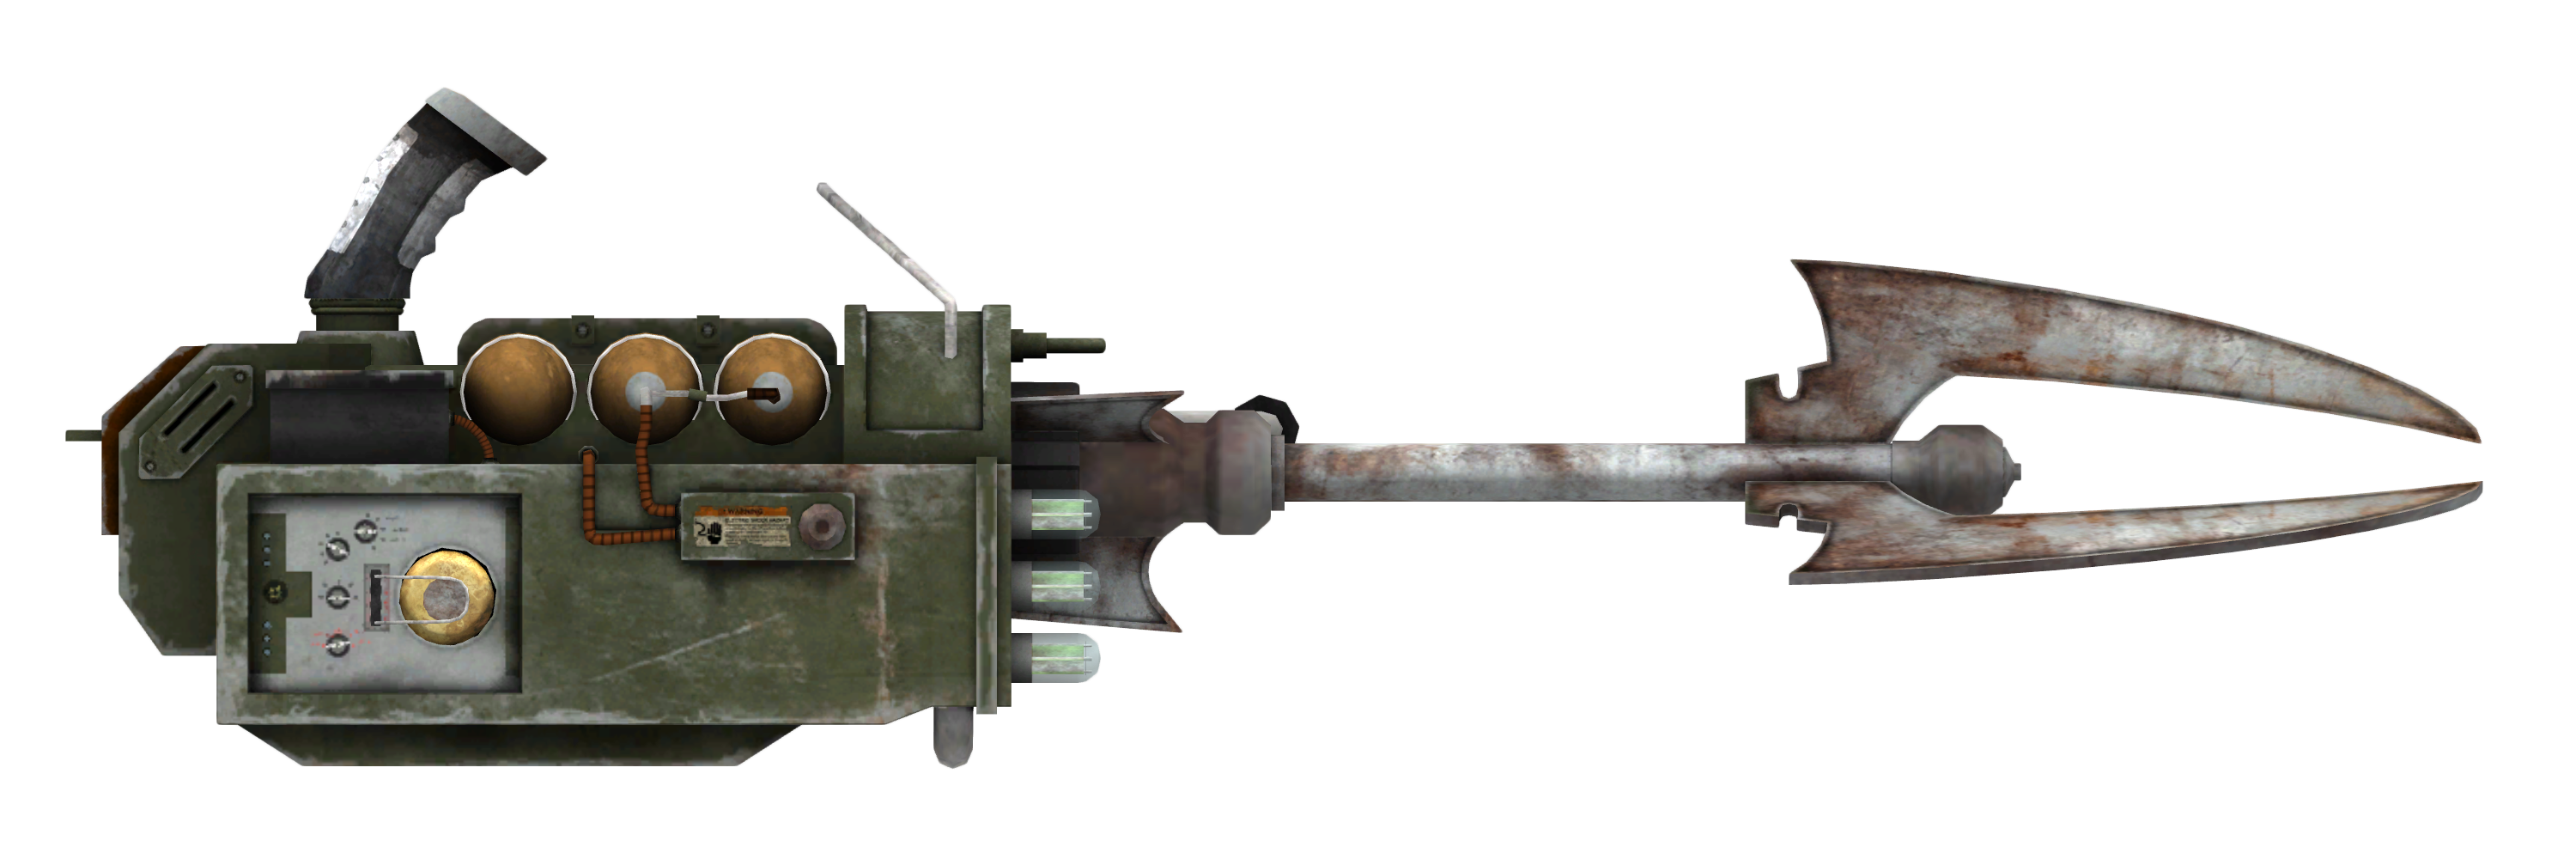 fallout new vegas plasma rifle